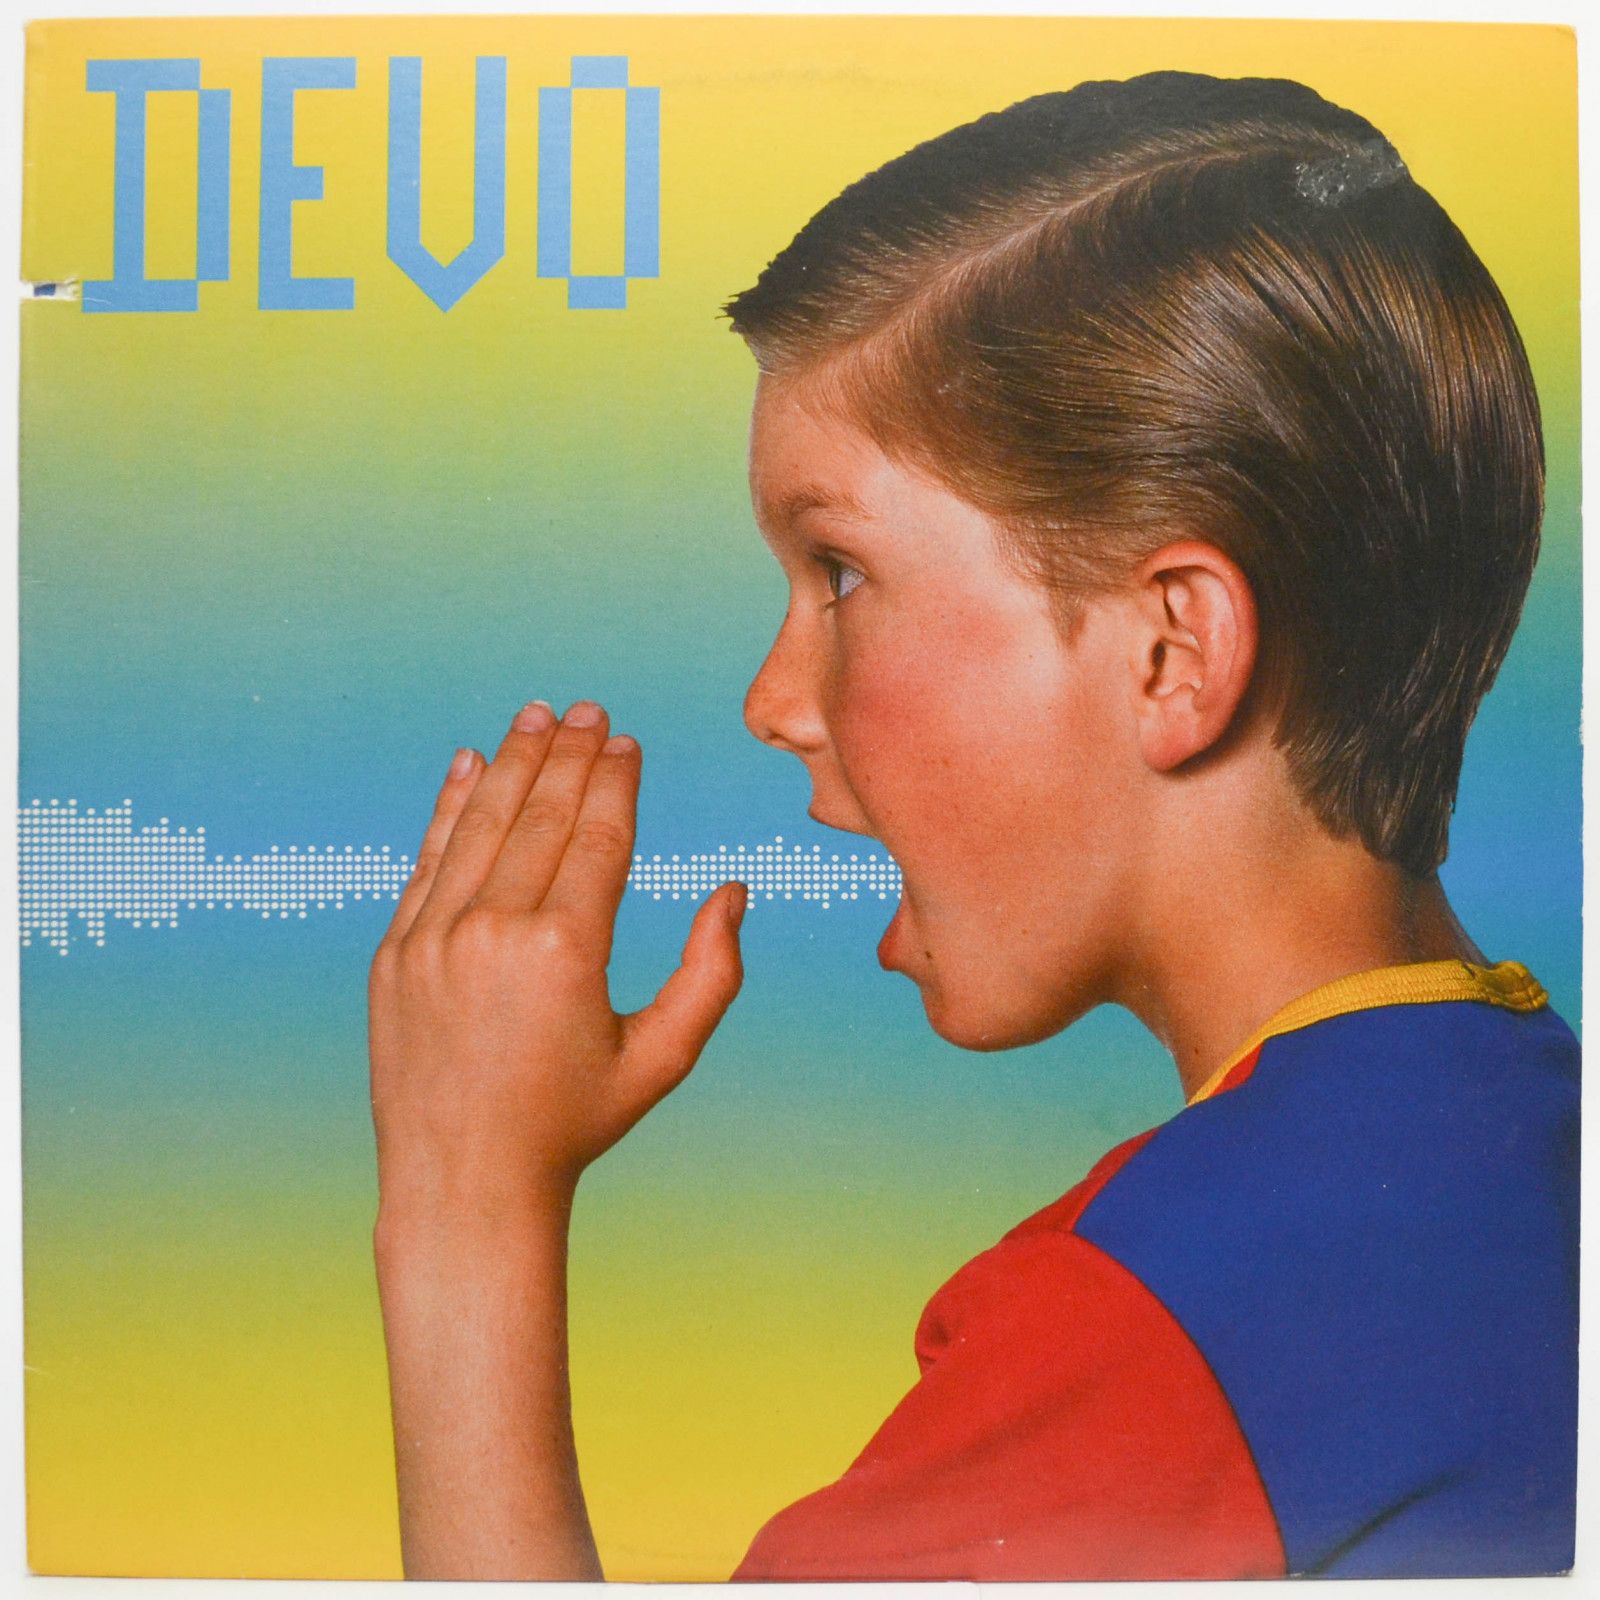 Devo — Shout (USA), 1984